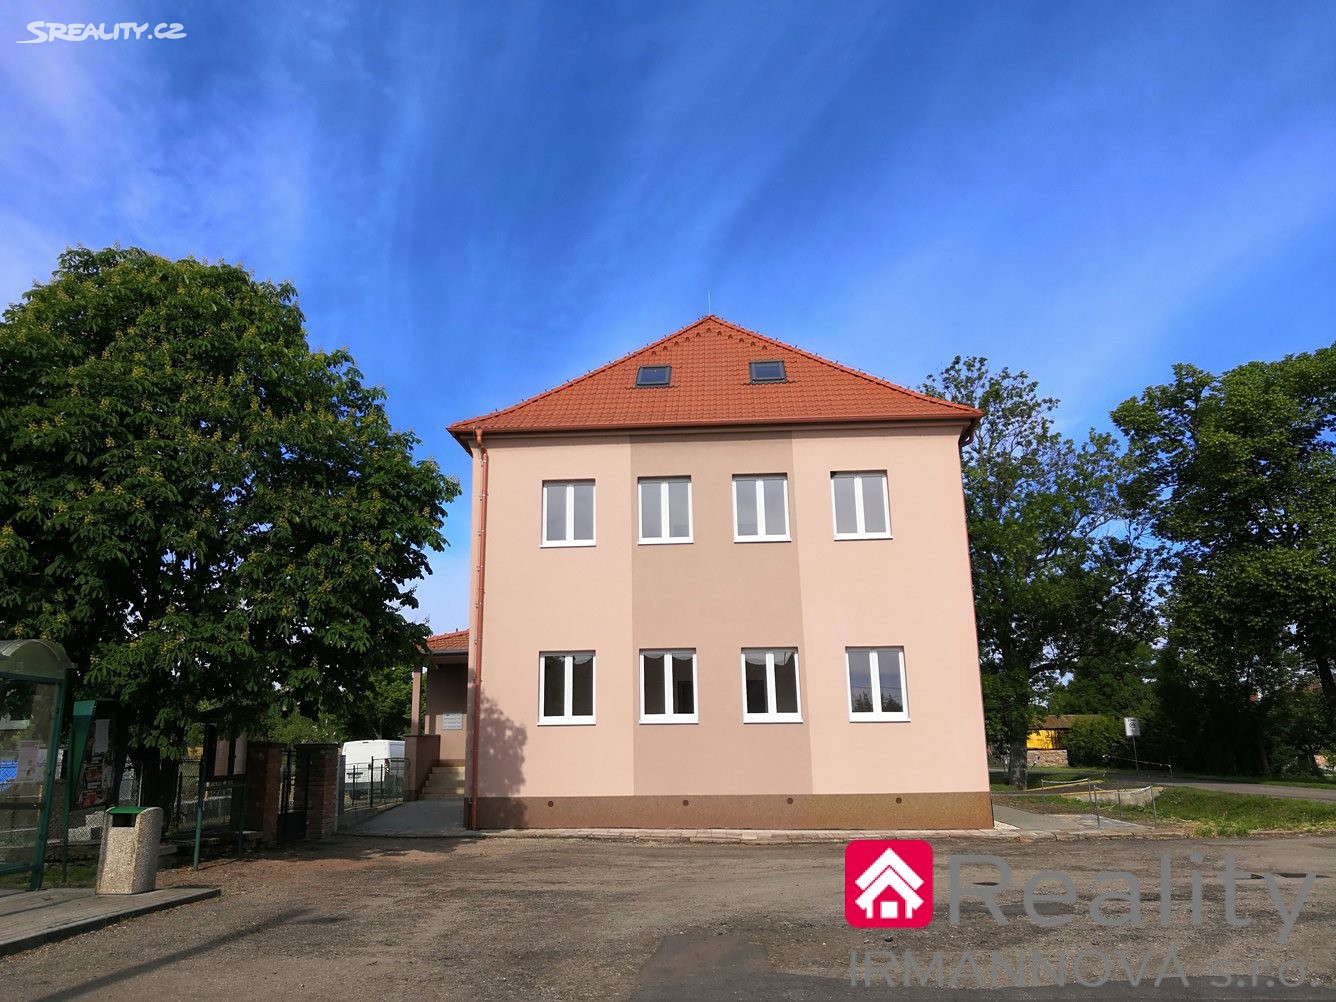 Prodej bytu 1+kk 26 m², Miroslav - Kašenec, okres Znojmo